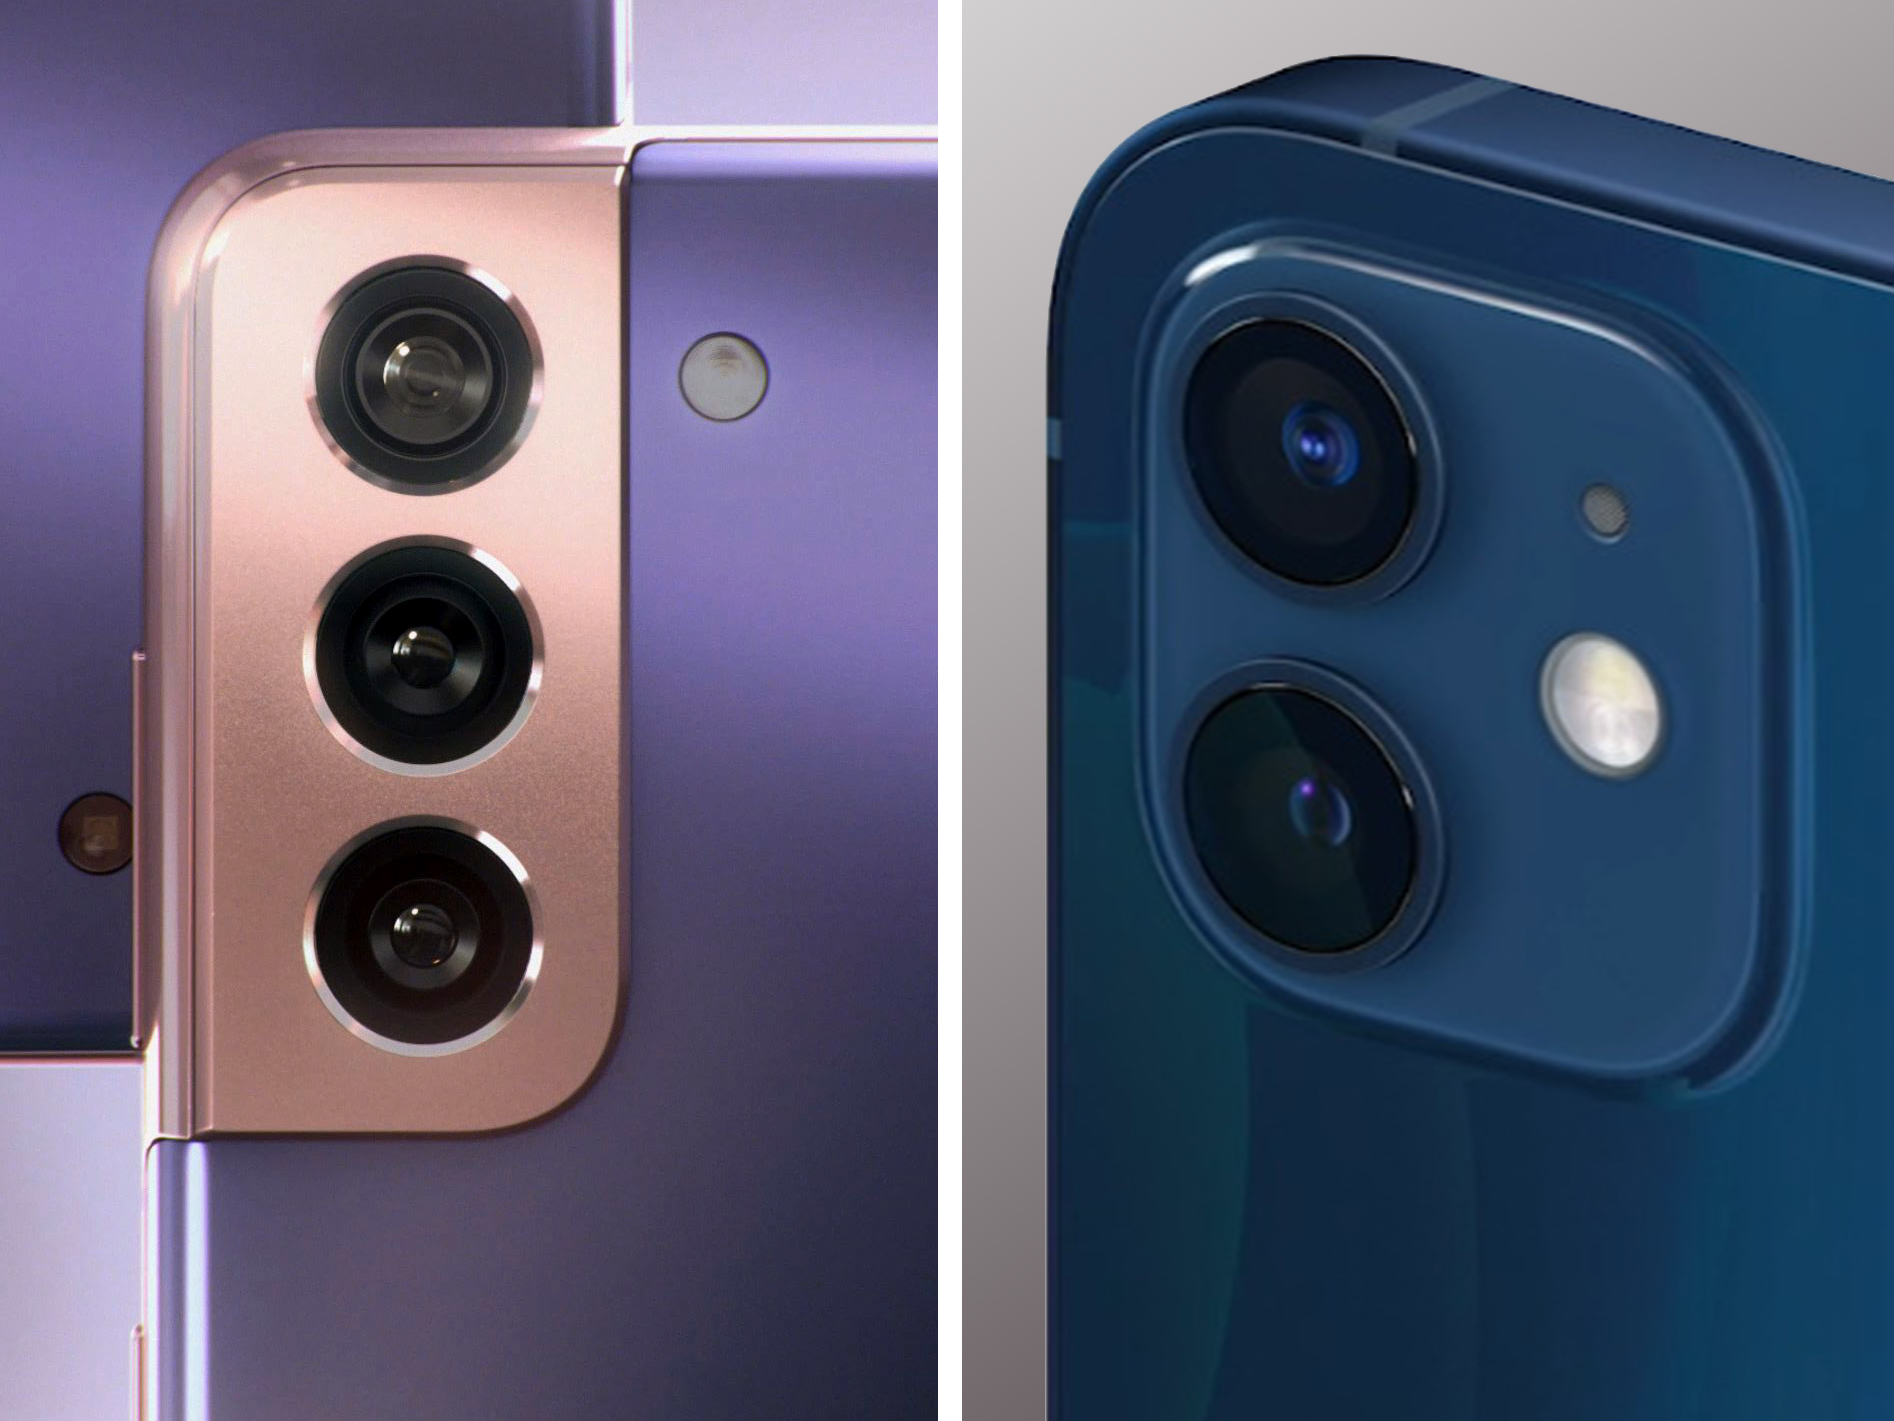 Samsung s21 обновления. Samsung s21 iphone 12. Камера самсунг s21. Samsung Galaxy s21 vs iphone 12 камера. Самсунг с 21 камера.